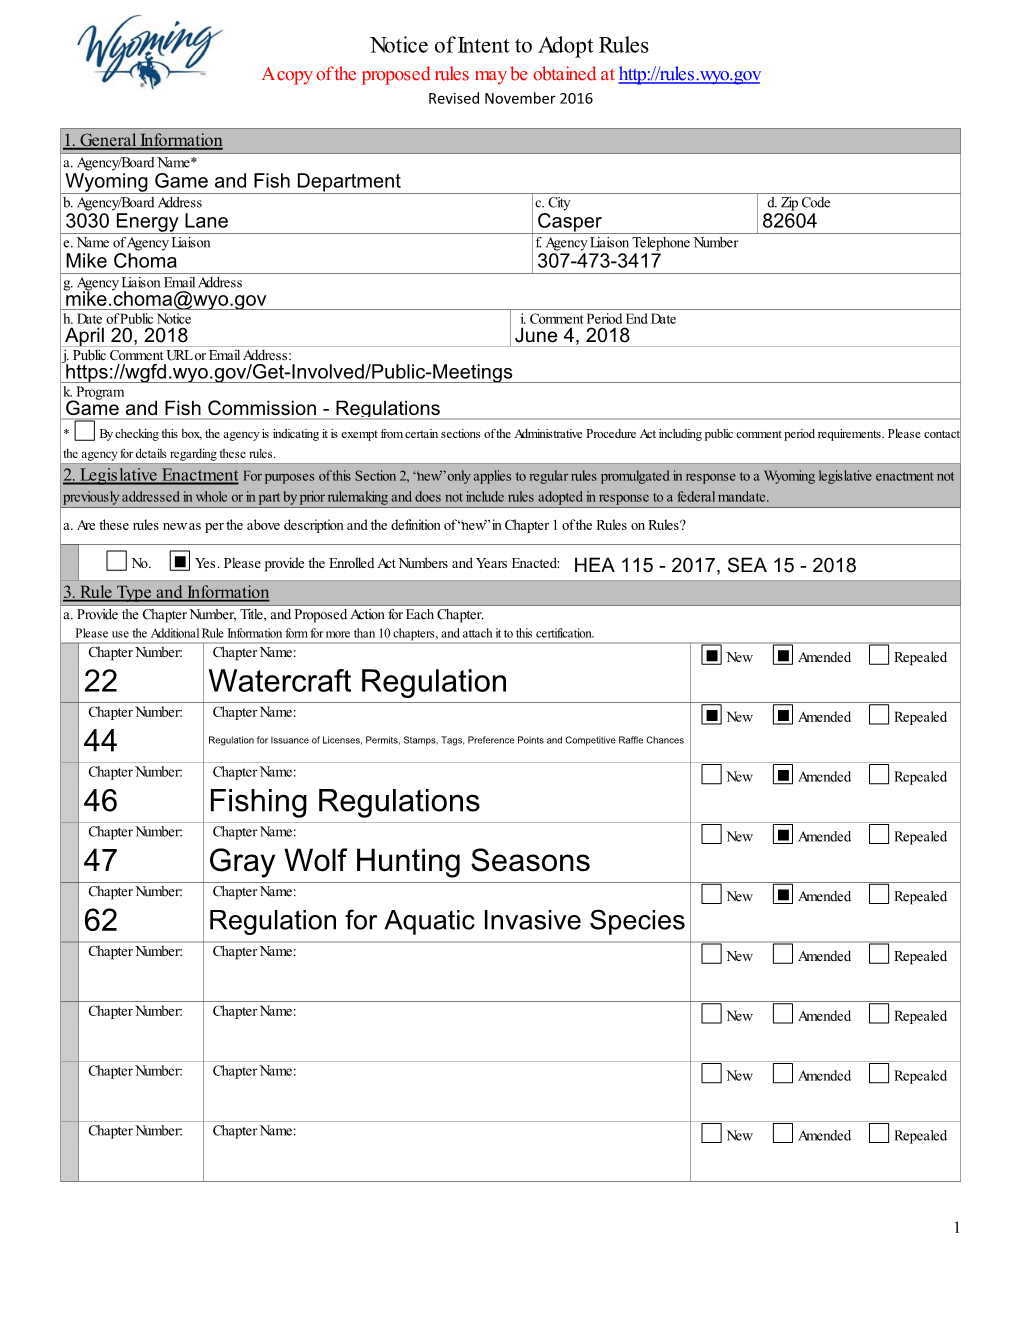 22 Watercraft Regulation 44 46 Fishing Regulations 47 Gray Wolf